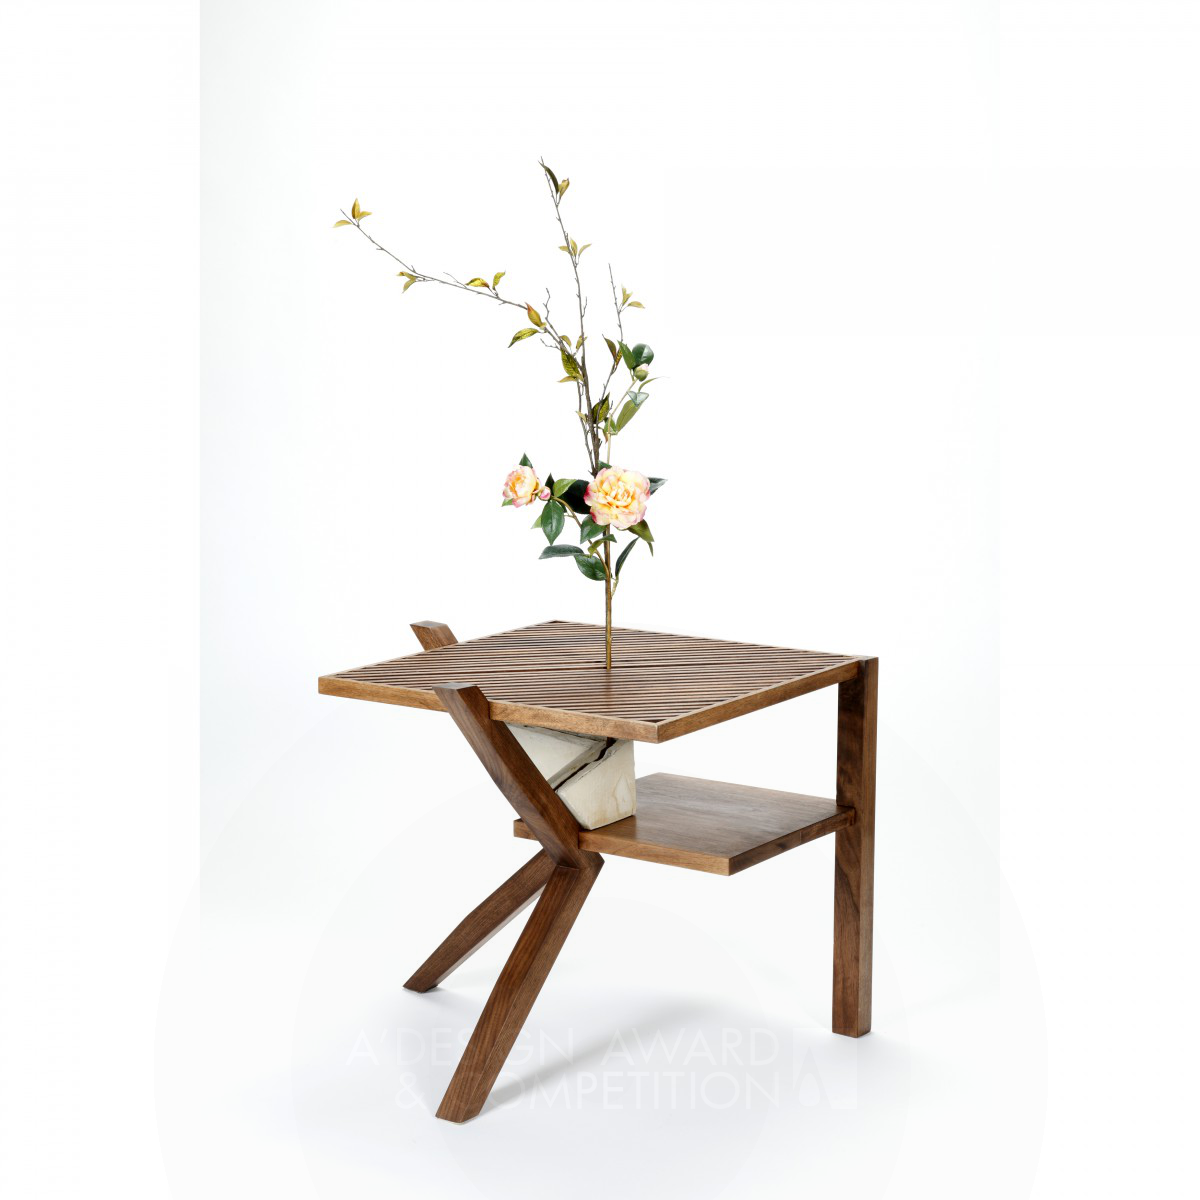 Growing Table Outdoor coffee table by Nga Ying, Amy Sun